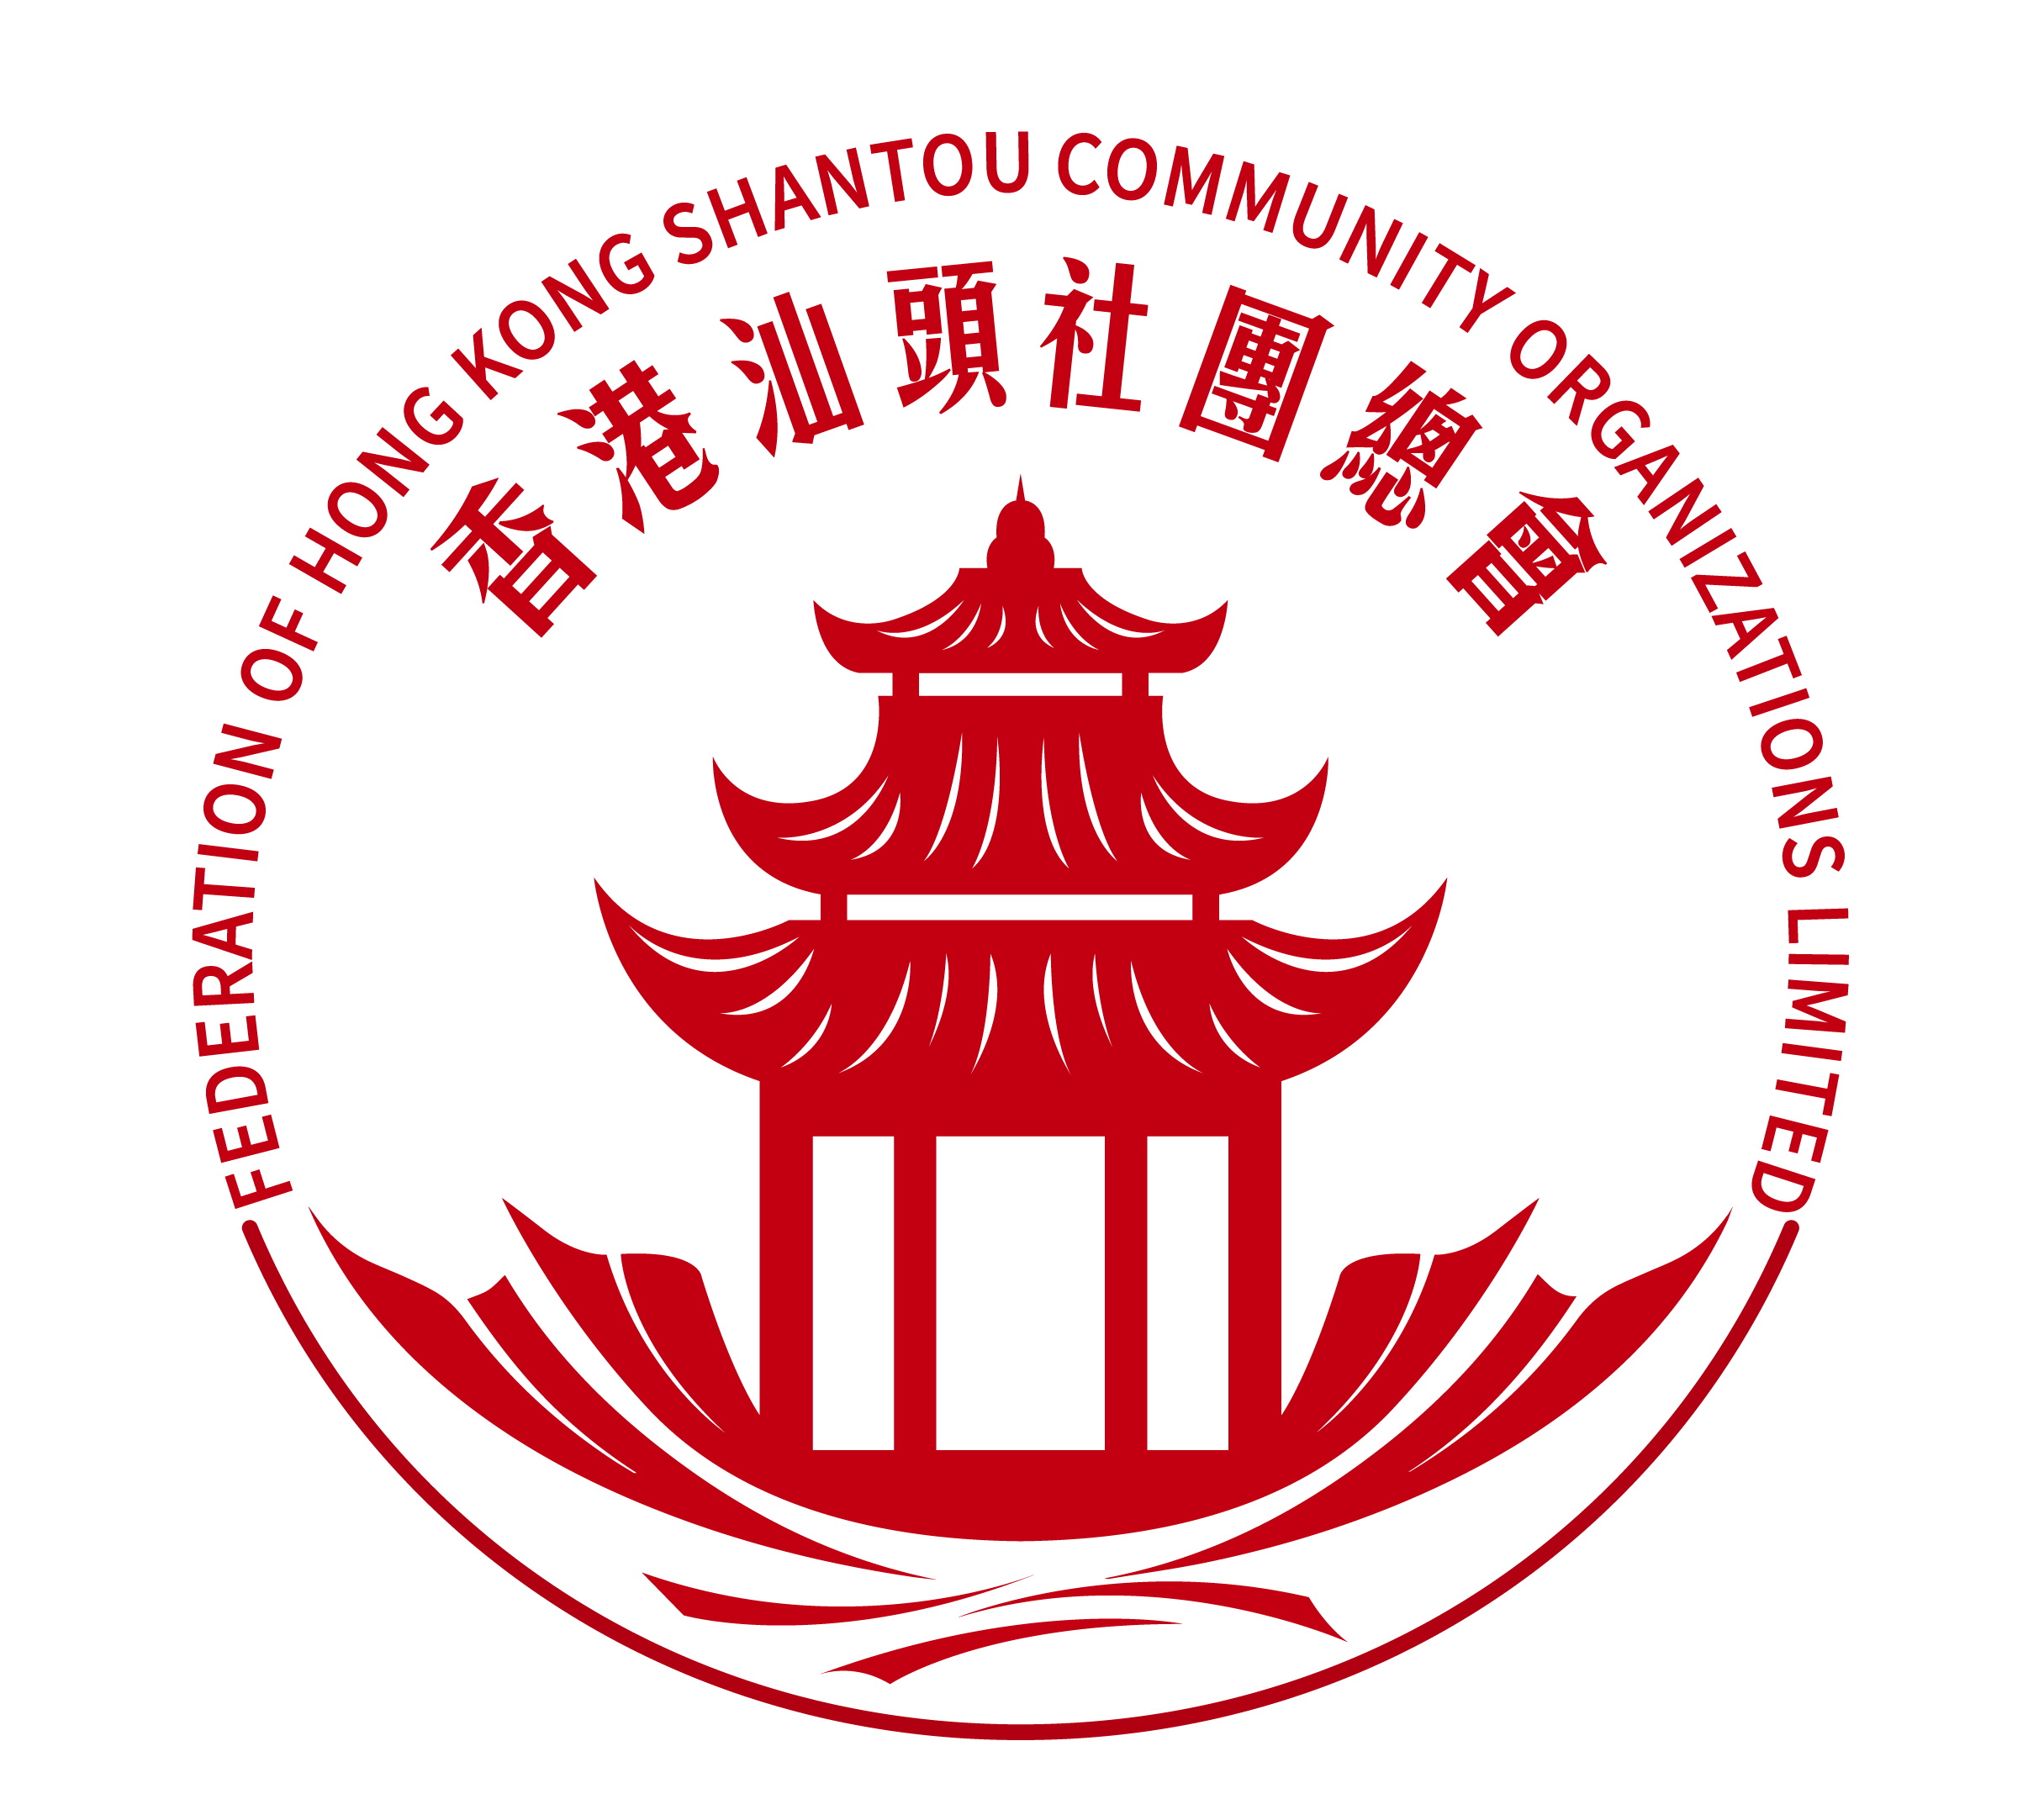 Federation Of Hong Kong Shantou Community Organizations Limited